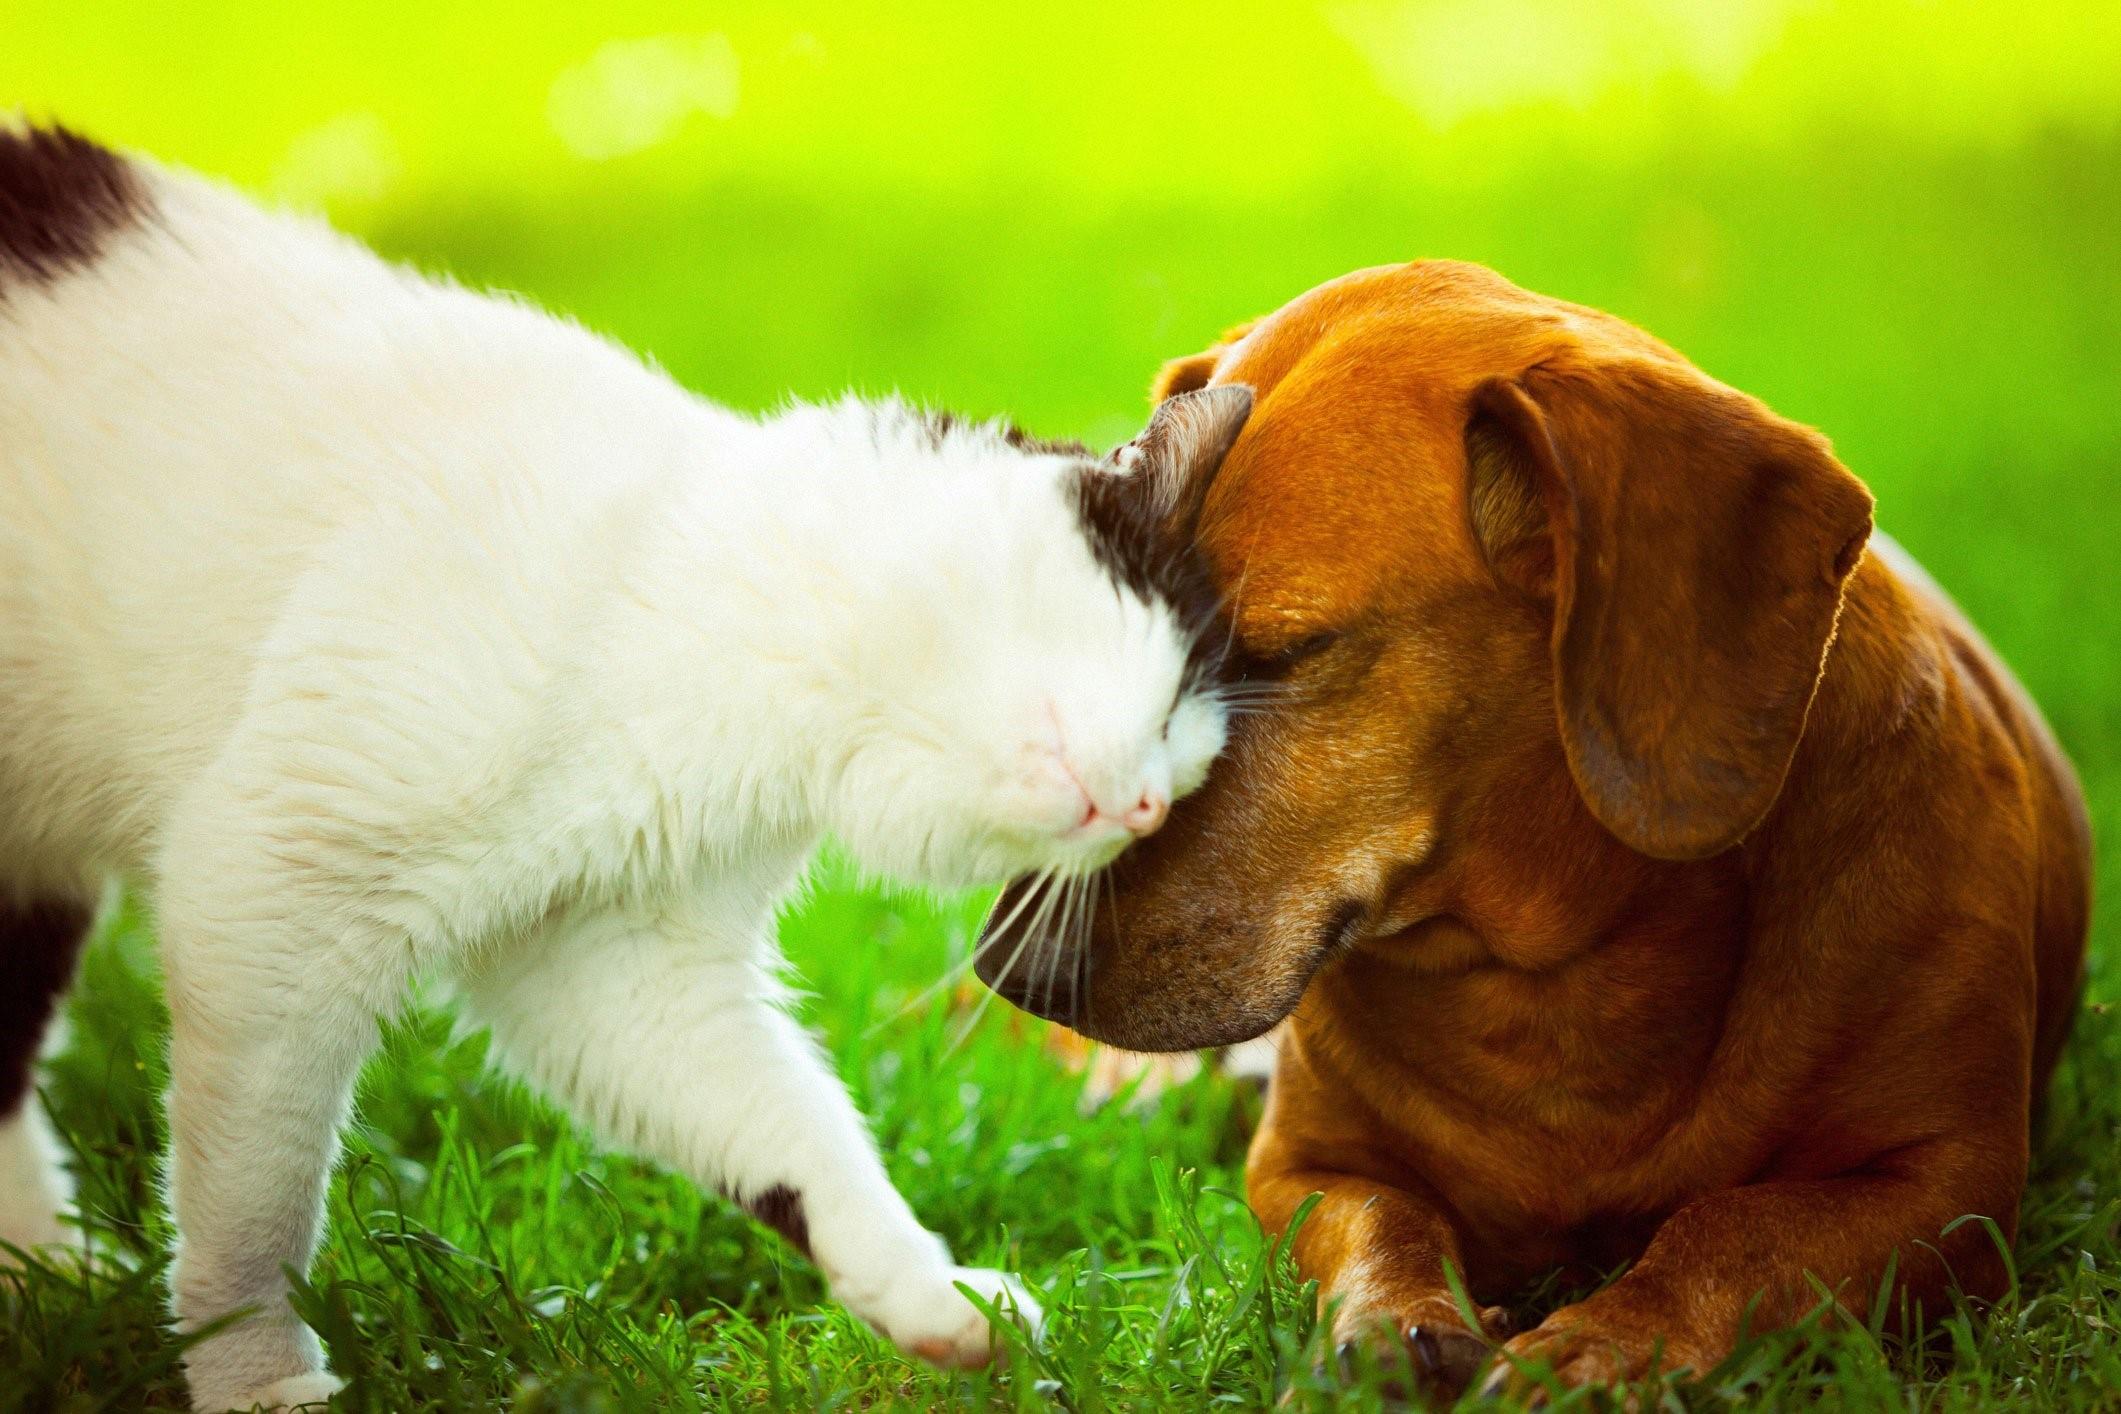 Your pet big. Кошки и собаки. Дружба кошки и собаки. Кот и собака дружат. Собака с кошкой дружат.